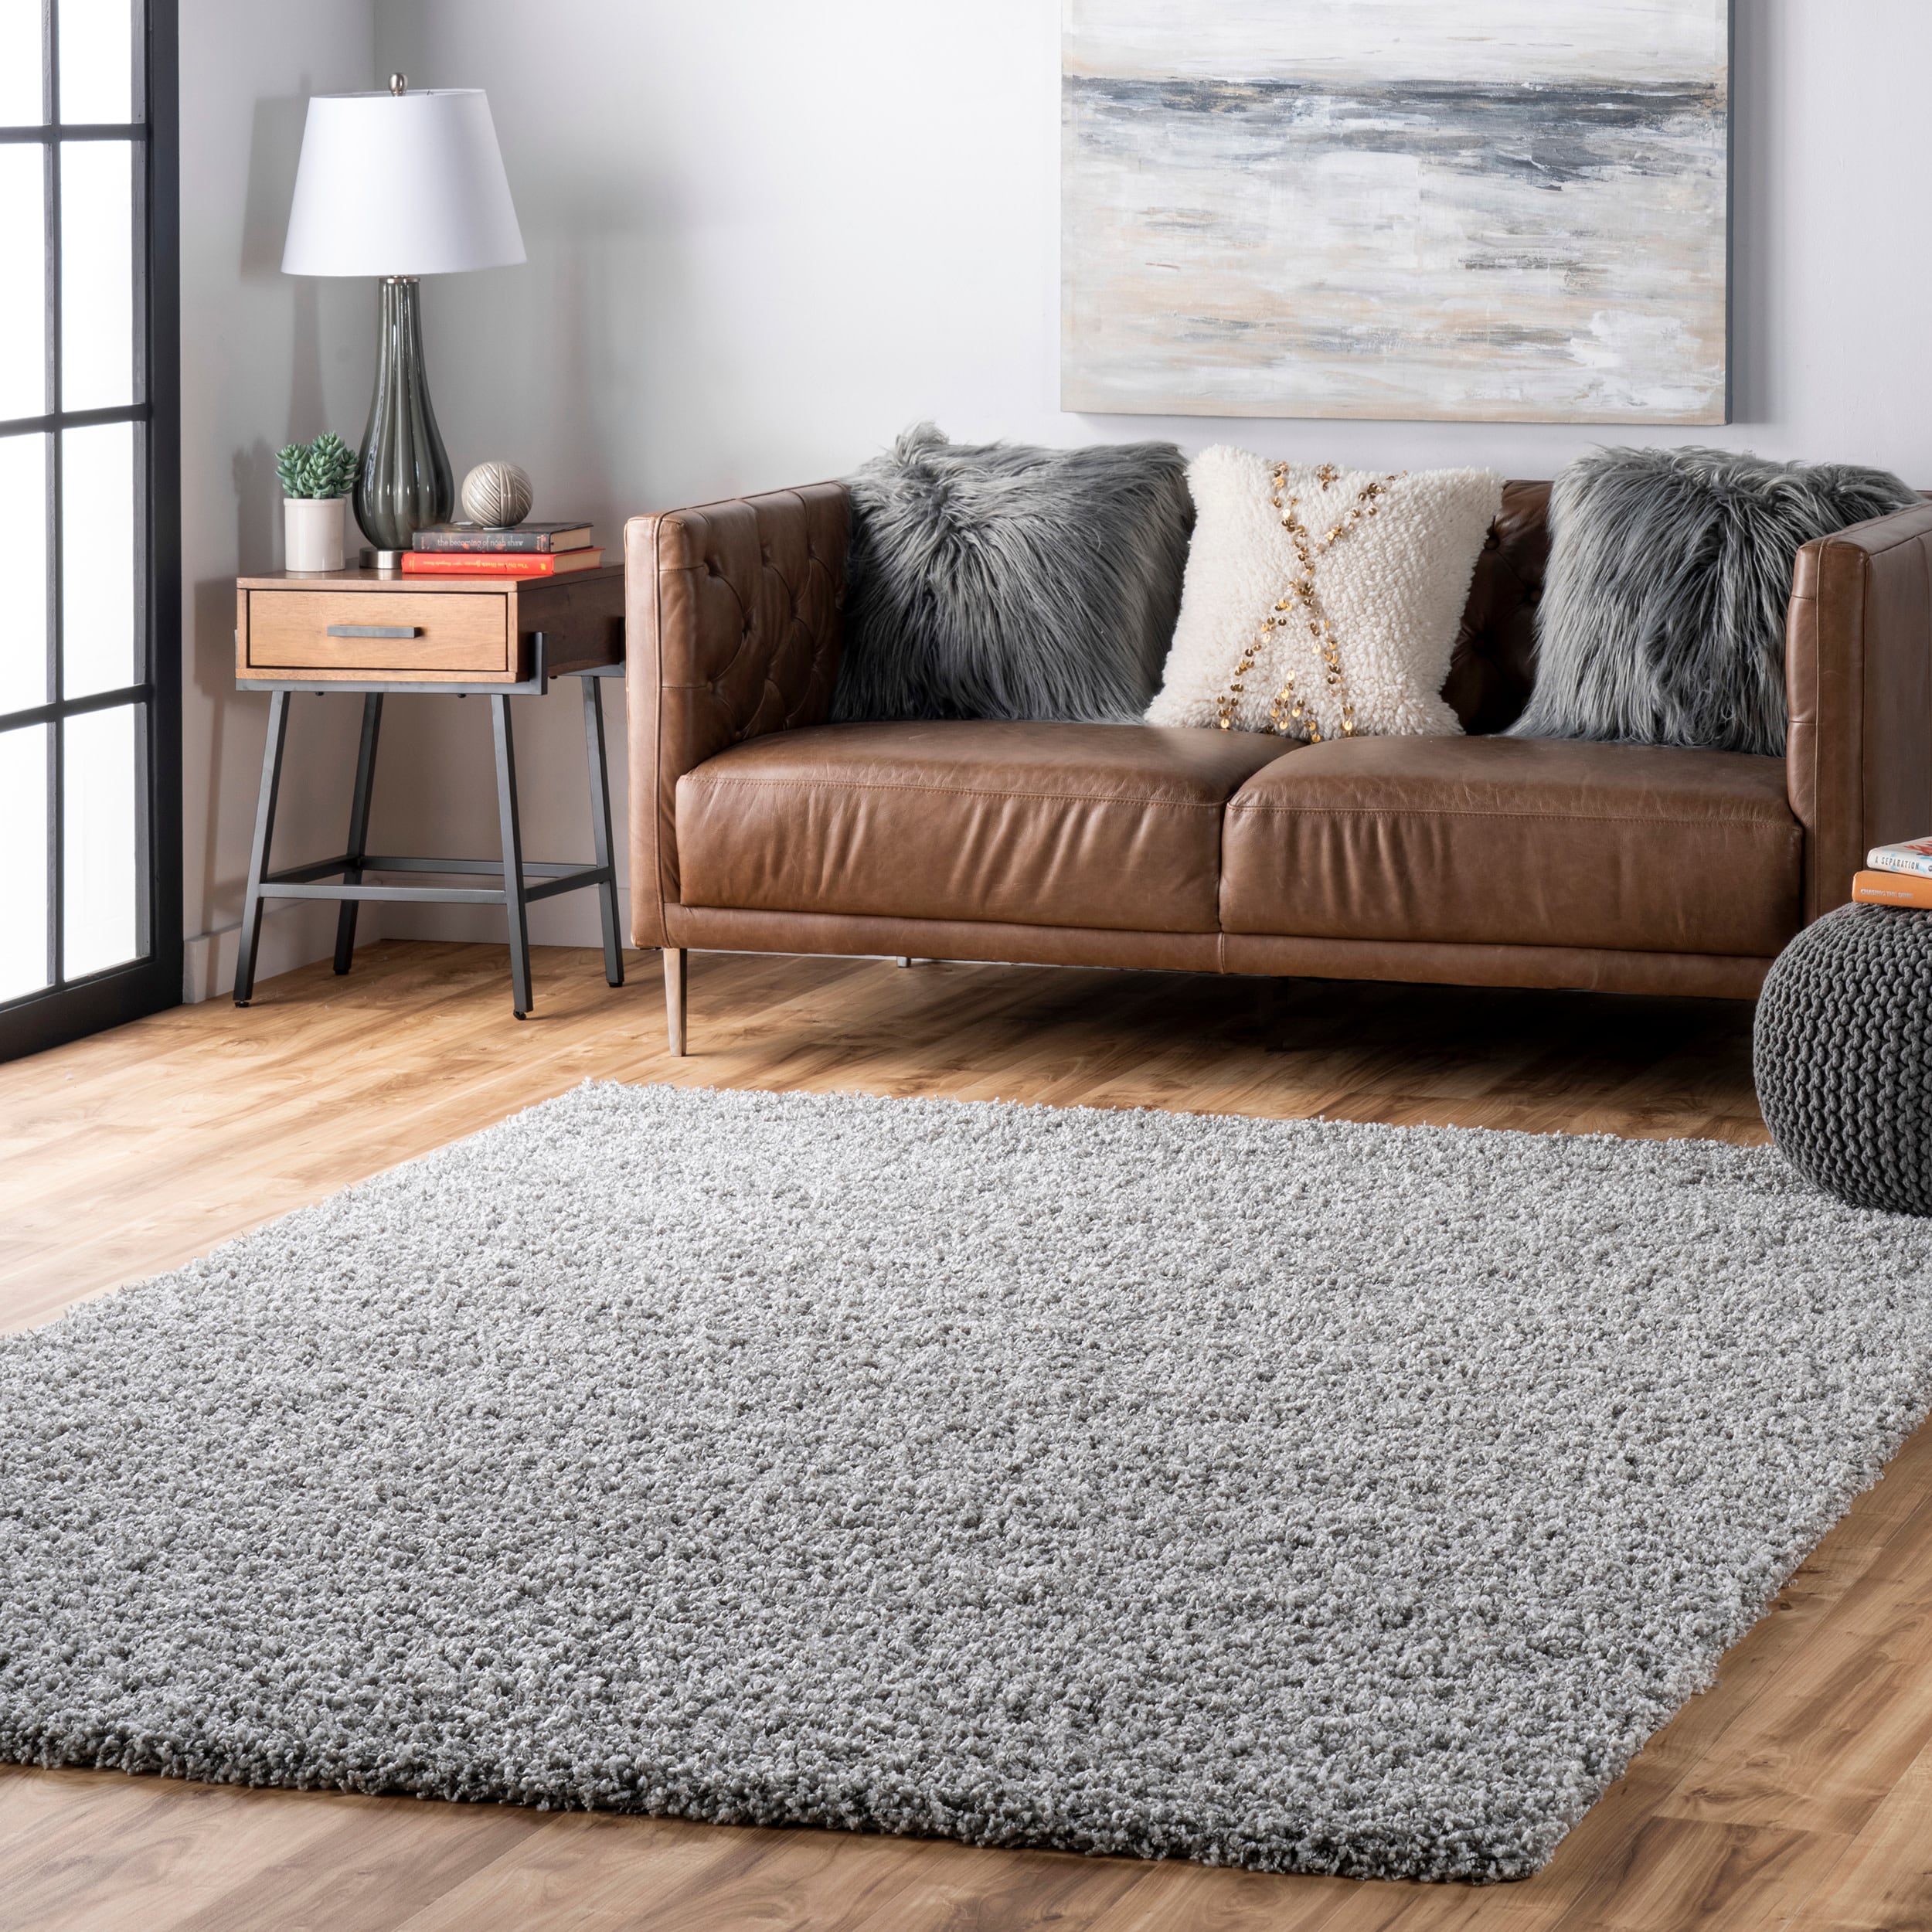 6 FT X 36 in Skid-resistant Carpet Runner Praline Brown Hall Area Rug Floor Mat for sale online 